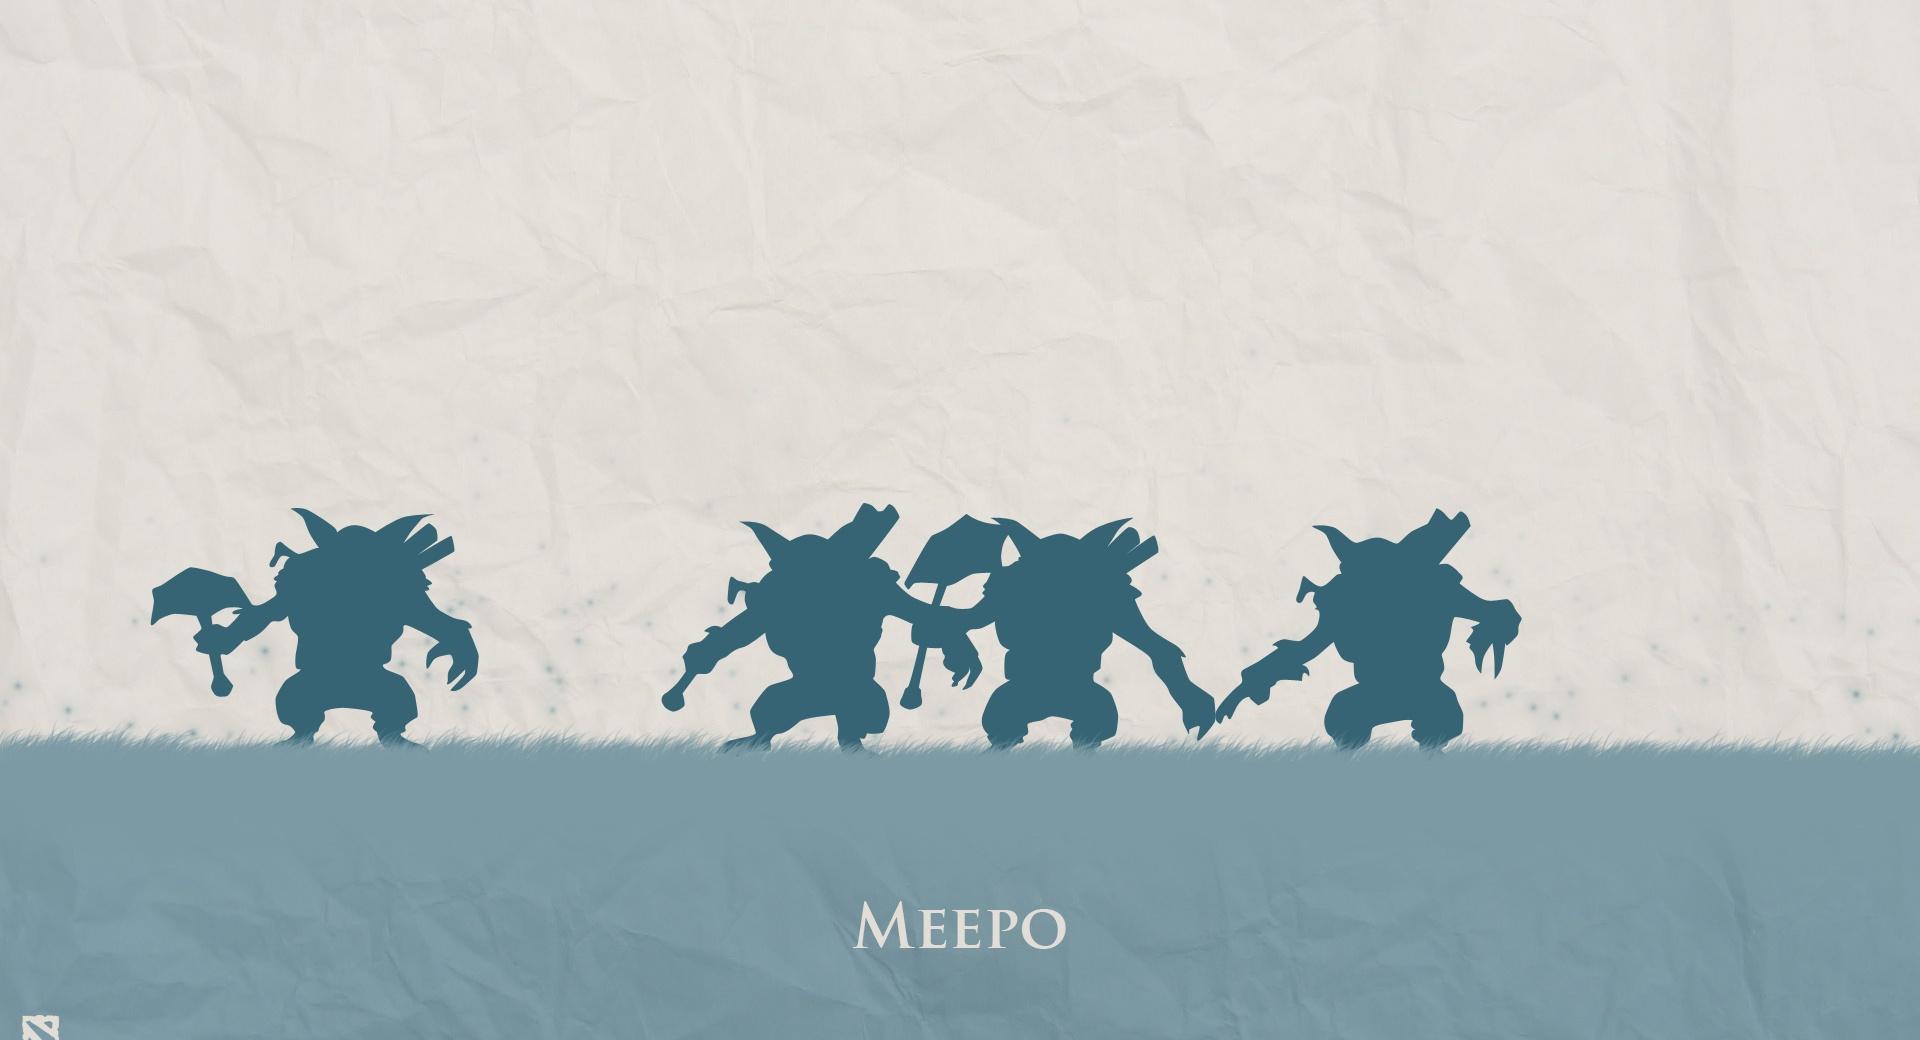 Meepo - DotA 2 at 2048 x 2048 iPad size wallpapers HD quality